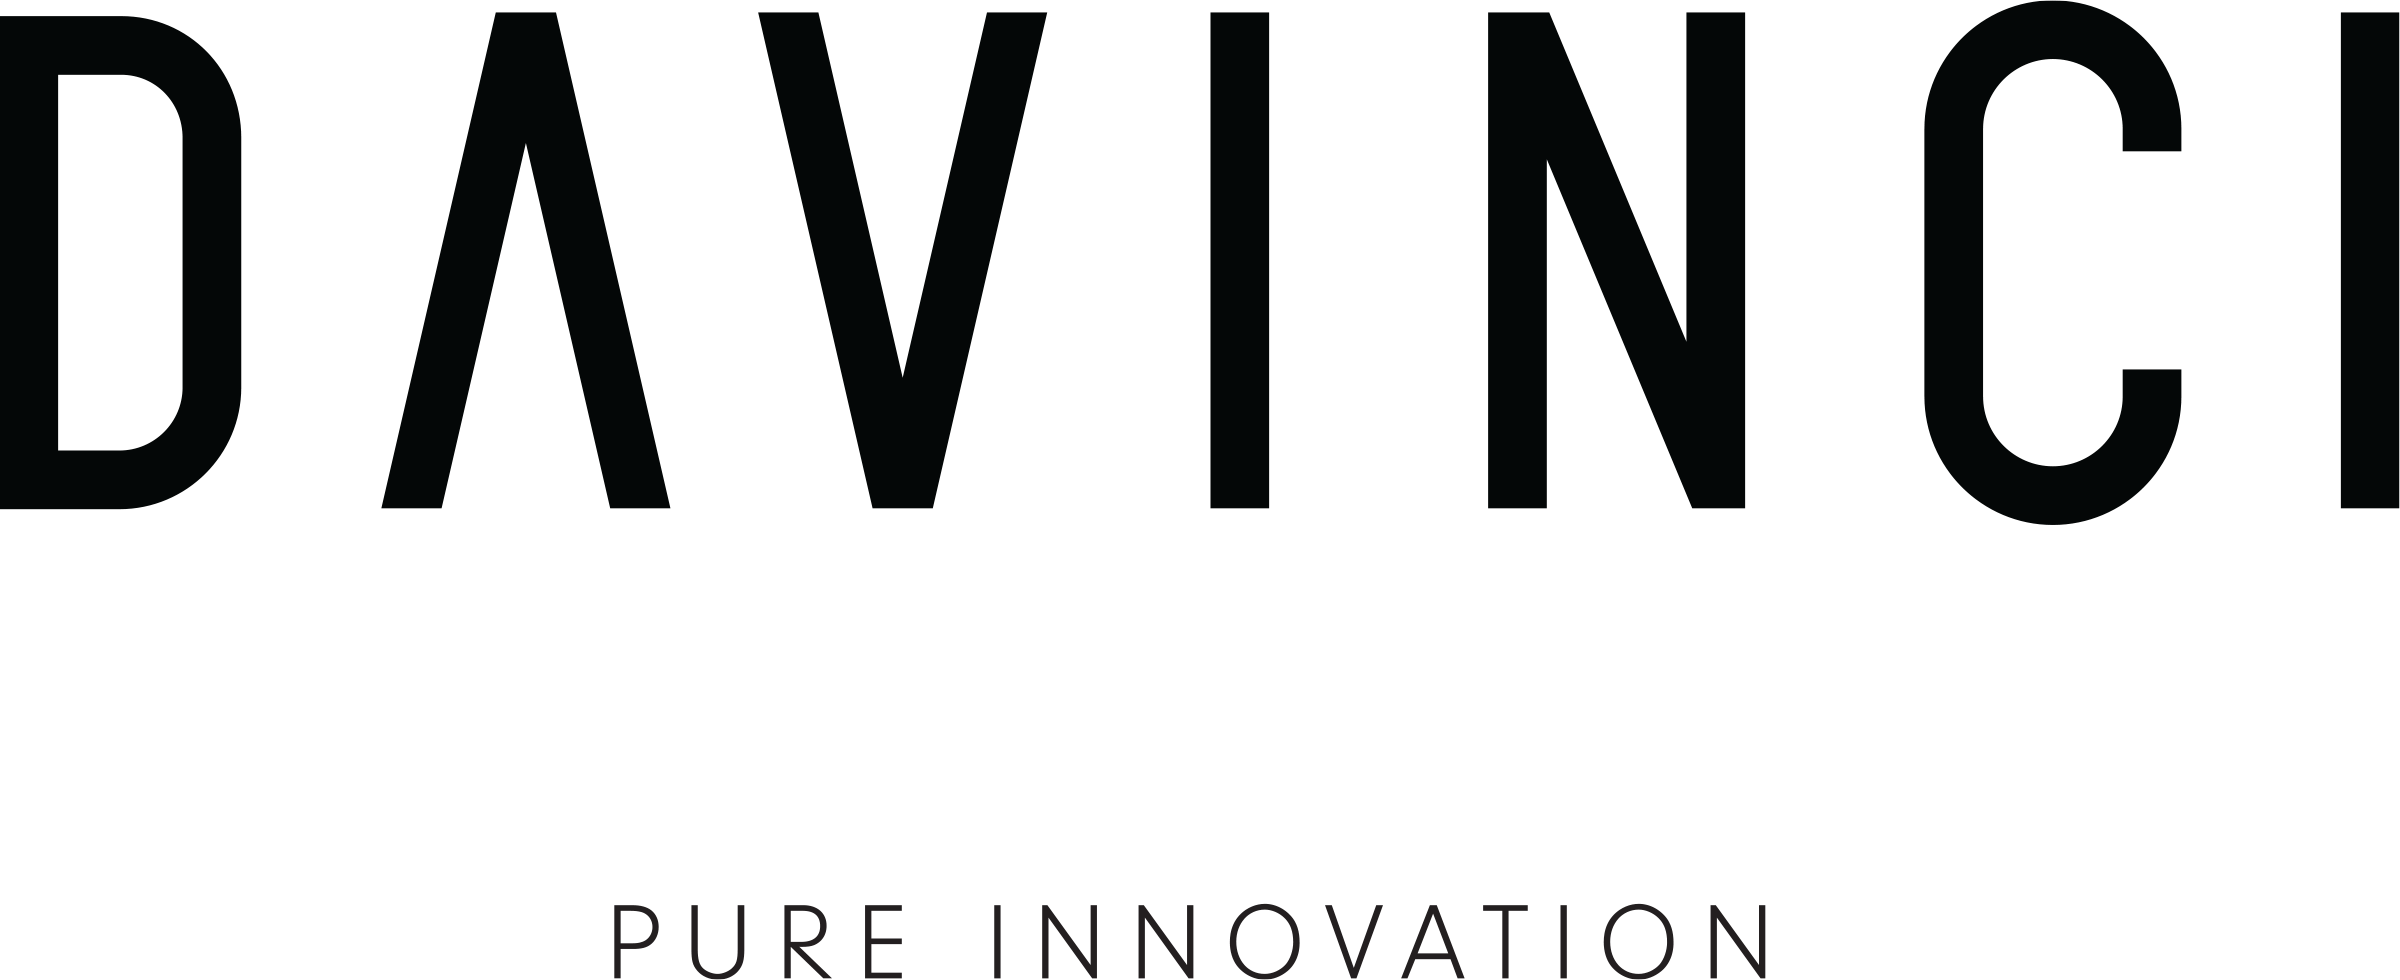 DaVinci Logo - DaVinci Vaporizer Press Junket